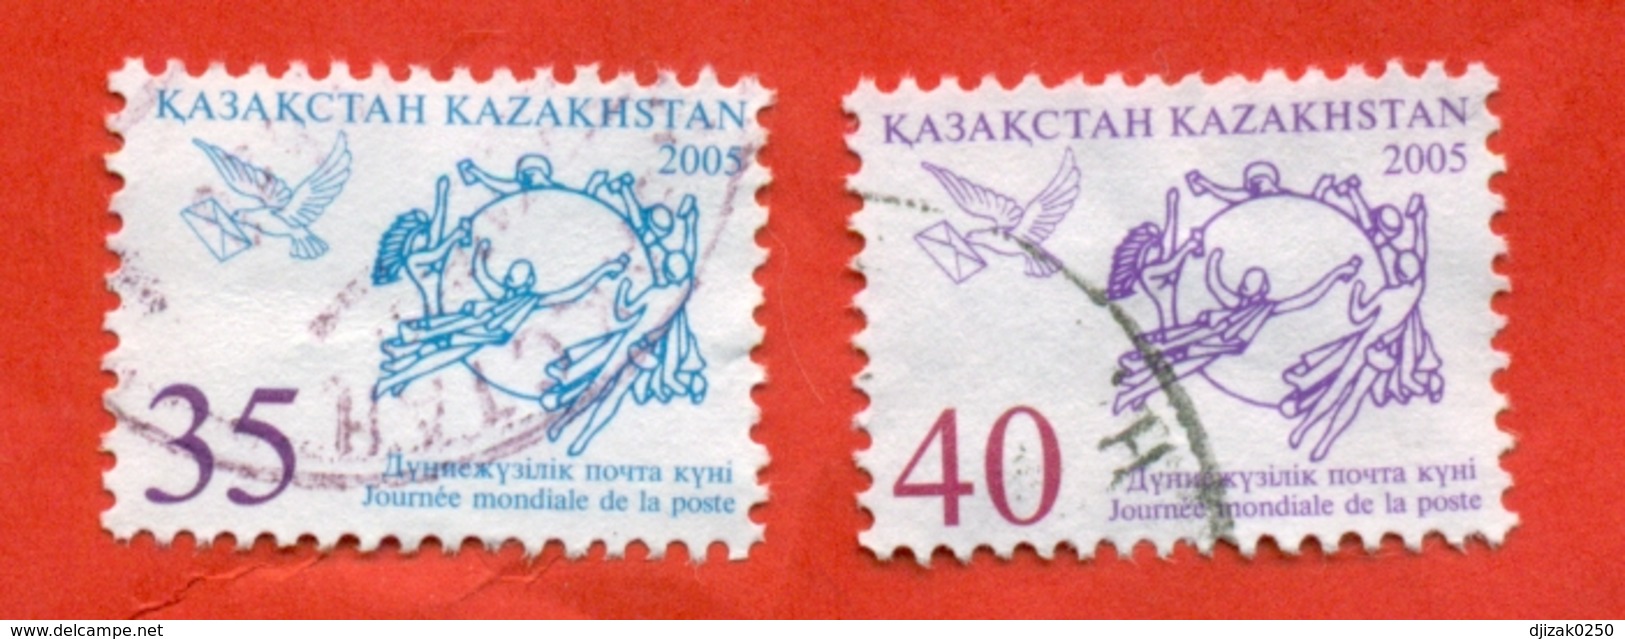 Kazakhstan 2005. World Post Day. Used Stamps. - Kazakhstan